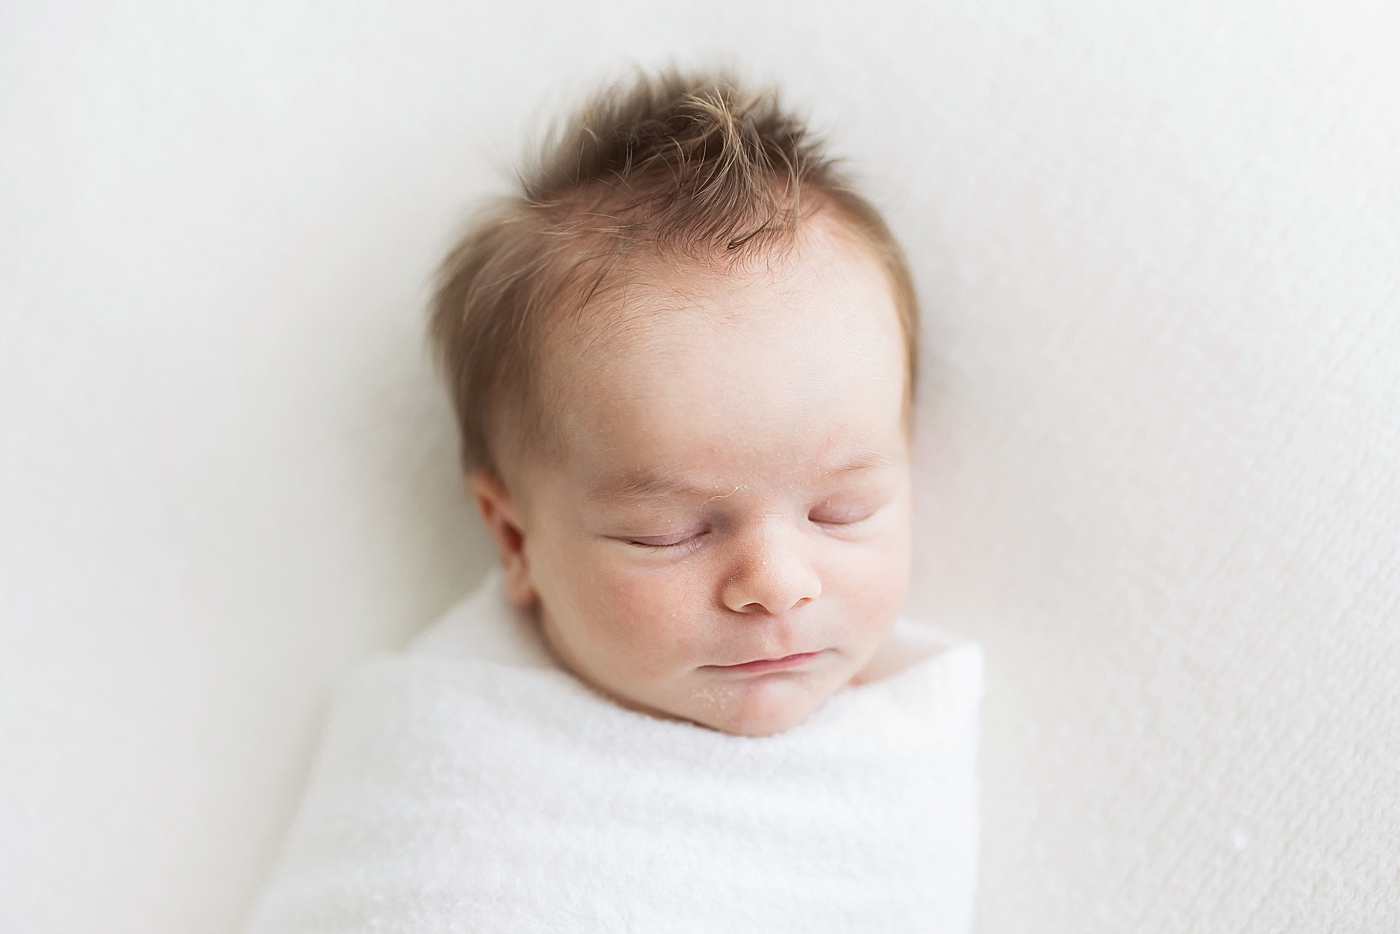 Newborn baby boy with a head full of hair sleeping. Photo by Fresh Light Photography.